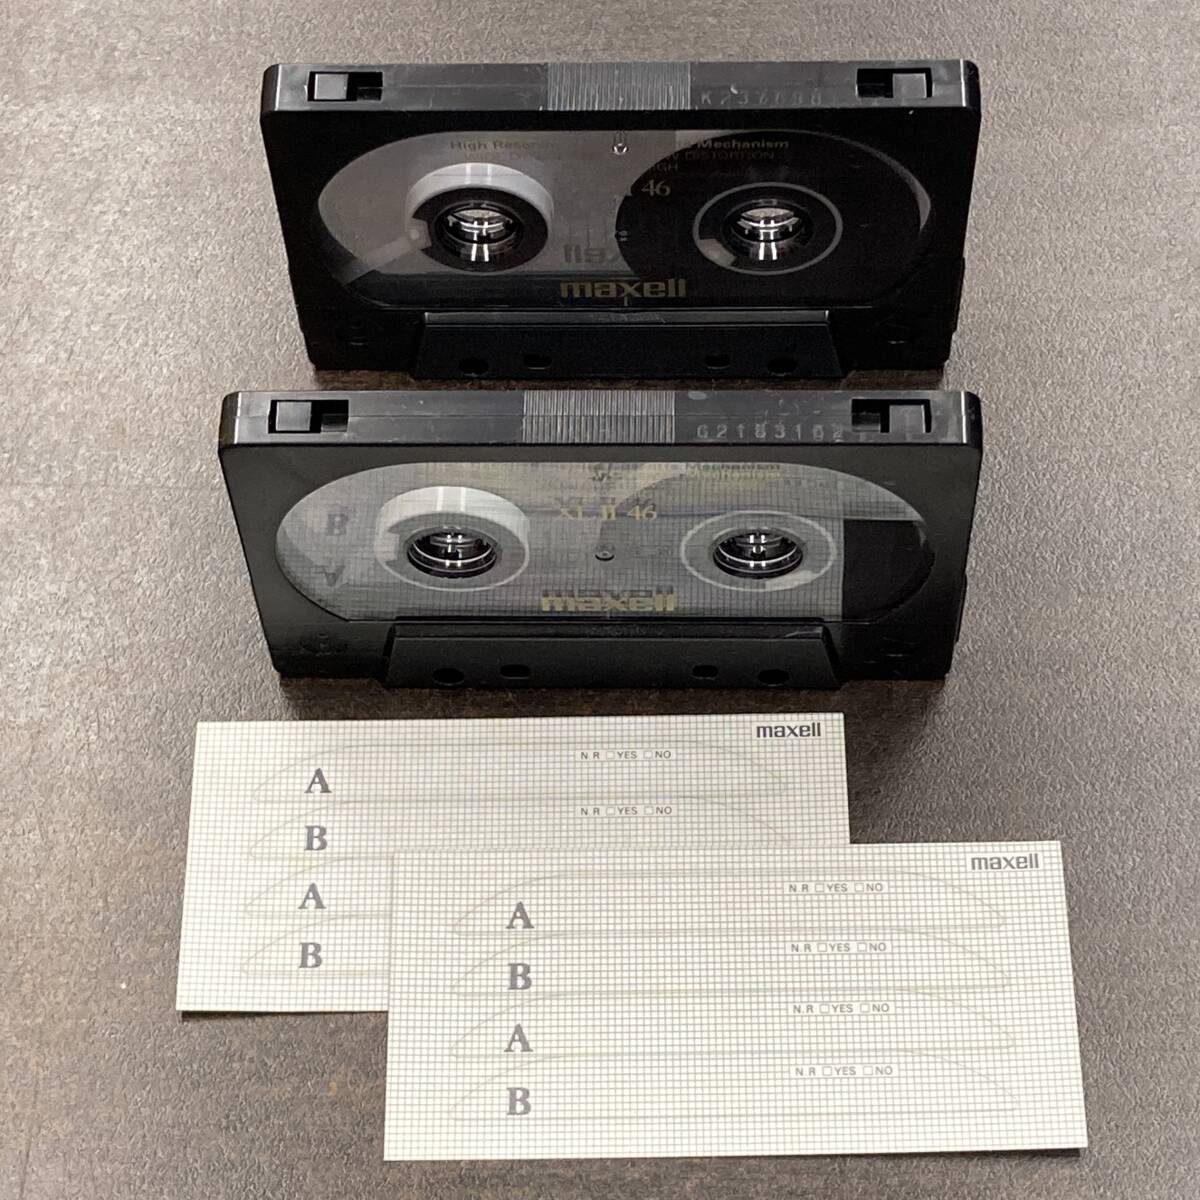 1815T マクセル XLII 46分 ハイポジ 2本 カセットテープ/Two Maxell XLII 46 Type II High Position Audio Cassetteの画像2